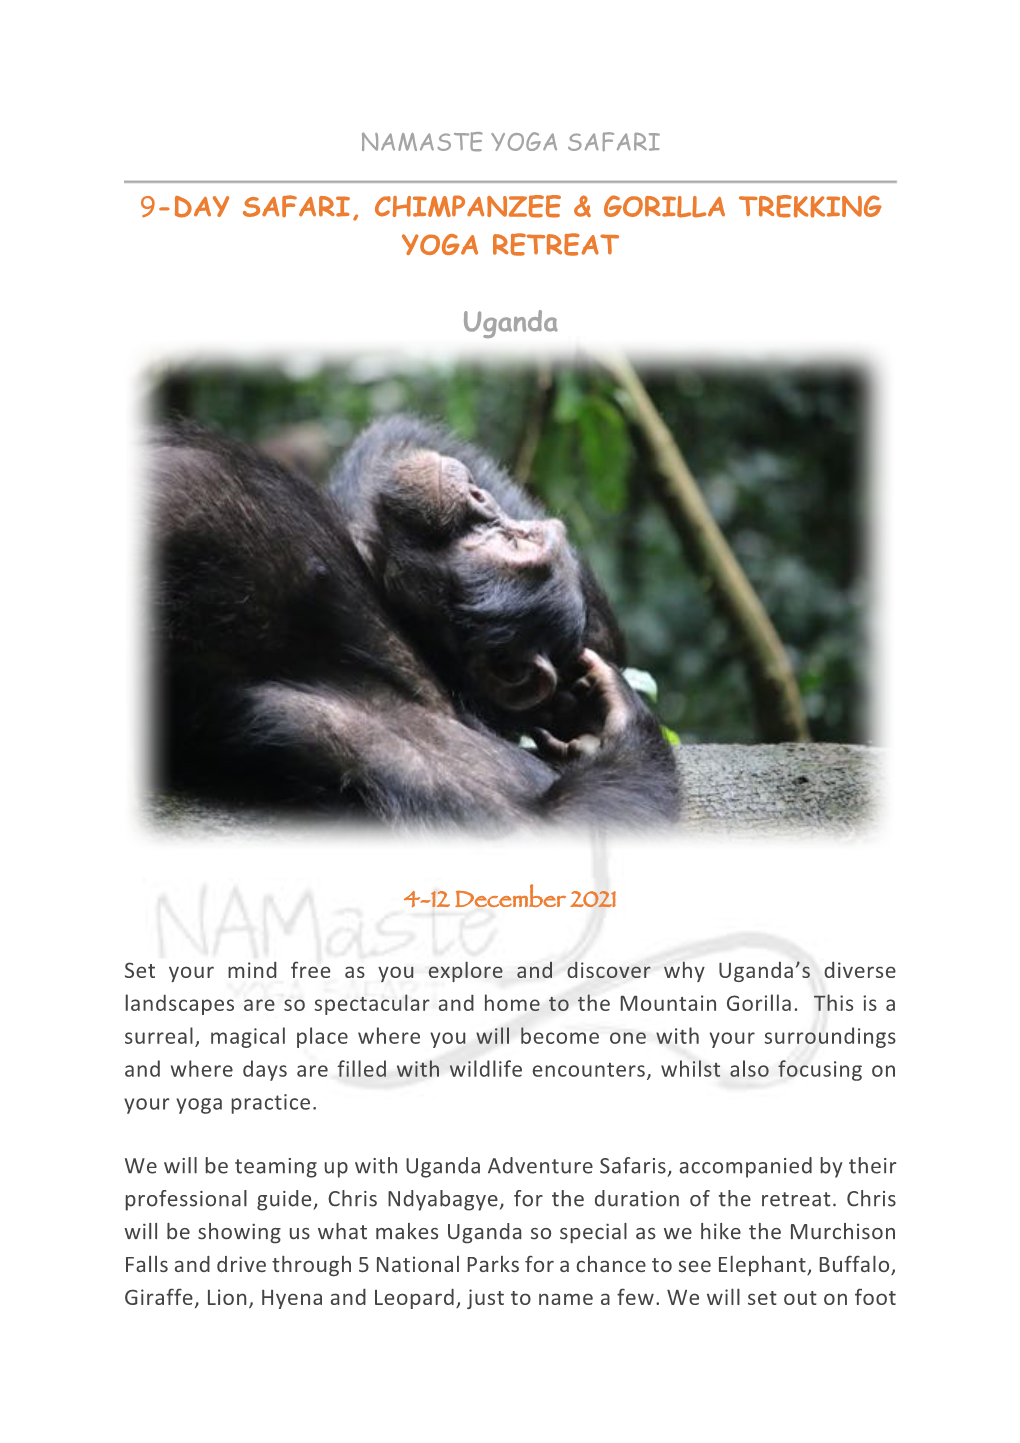 9-Day Safari, Chimpanzee & Gorilla Trekking Yoga